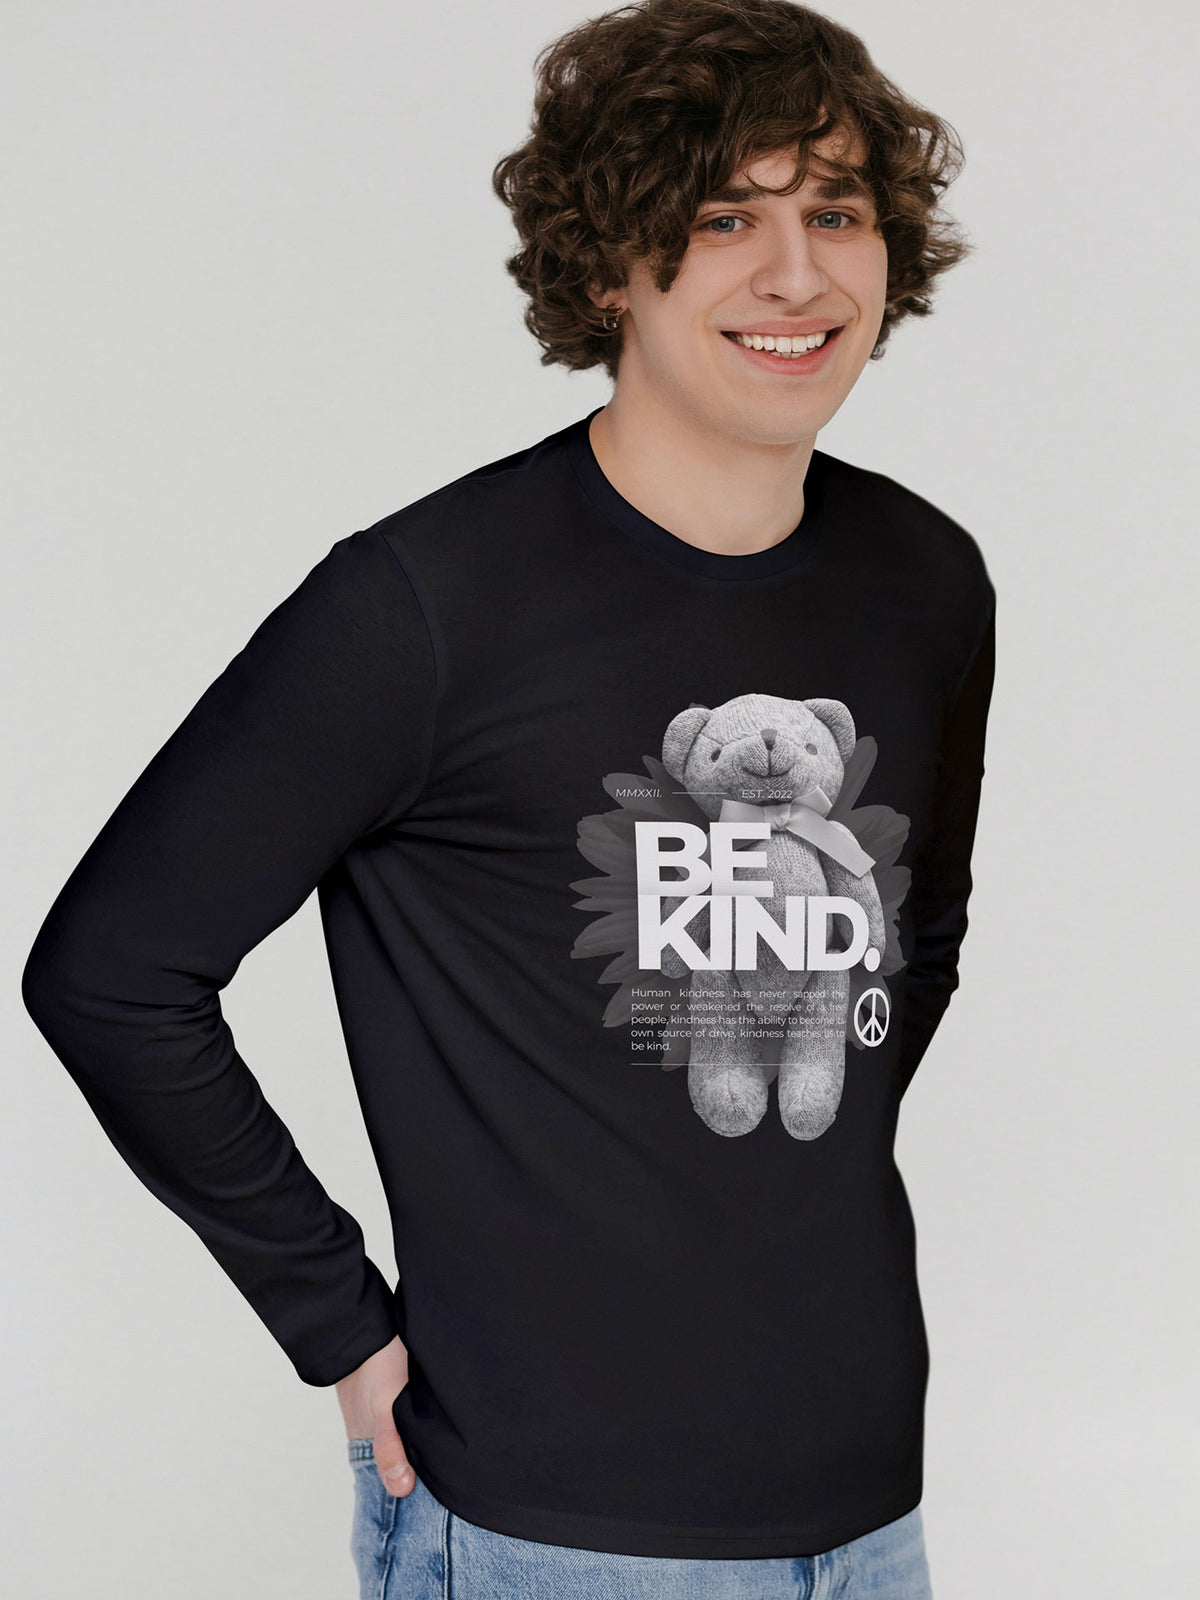 Men's Black Be Kind Printed Full-Sleeve T-shirt